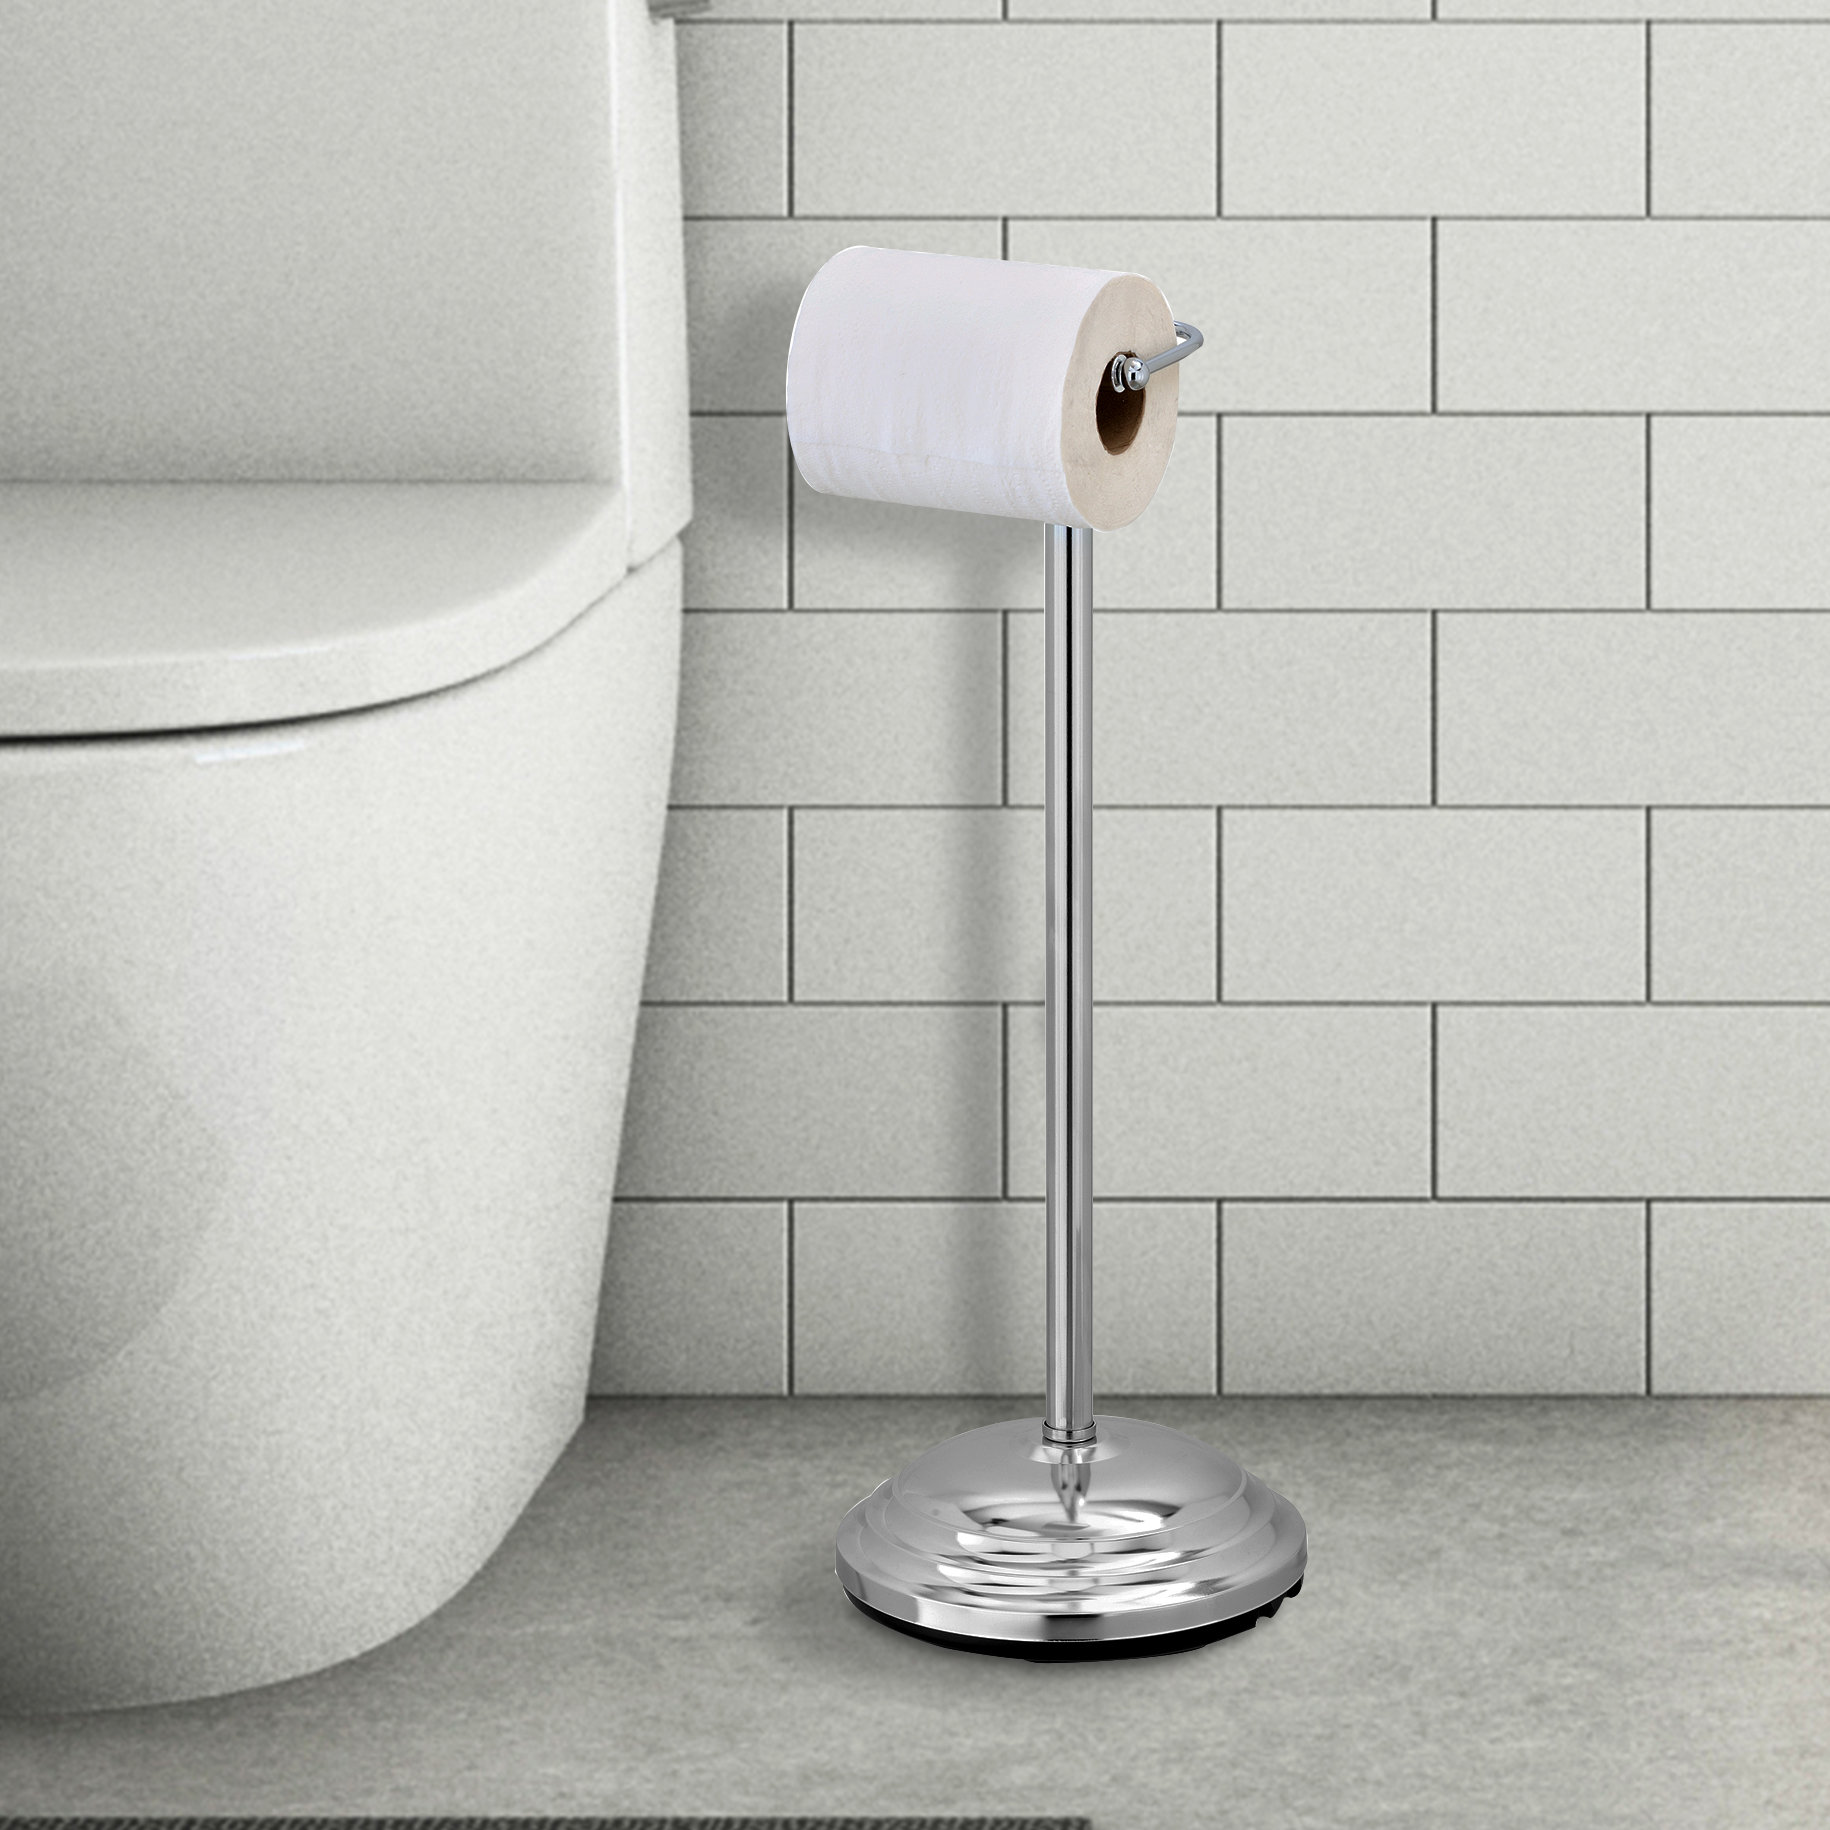 Evideco Metal Bathroom Freestanding Toilet Tissue Paper Roll Holder Reserve 4 Rolls, Silver